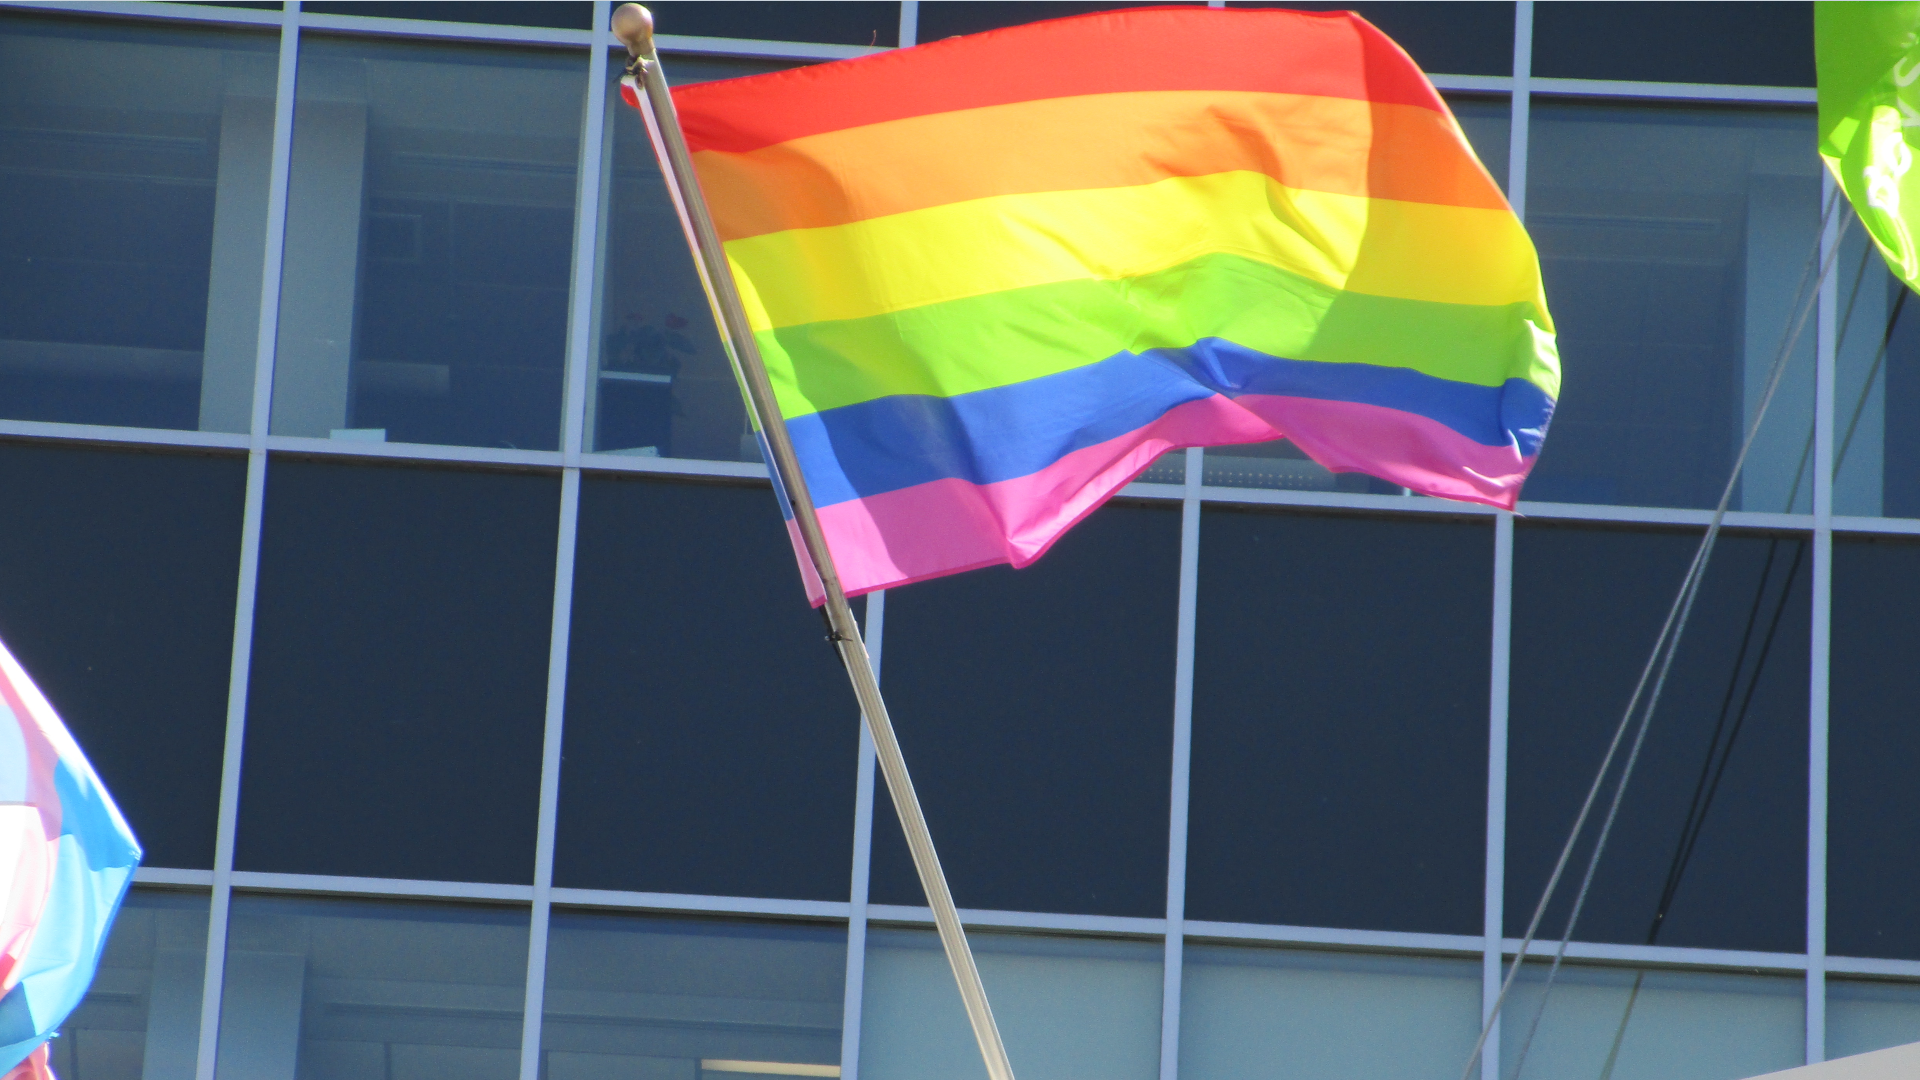 gay pride flag images